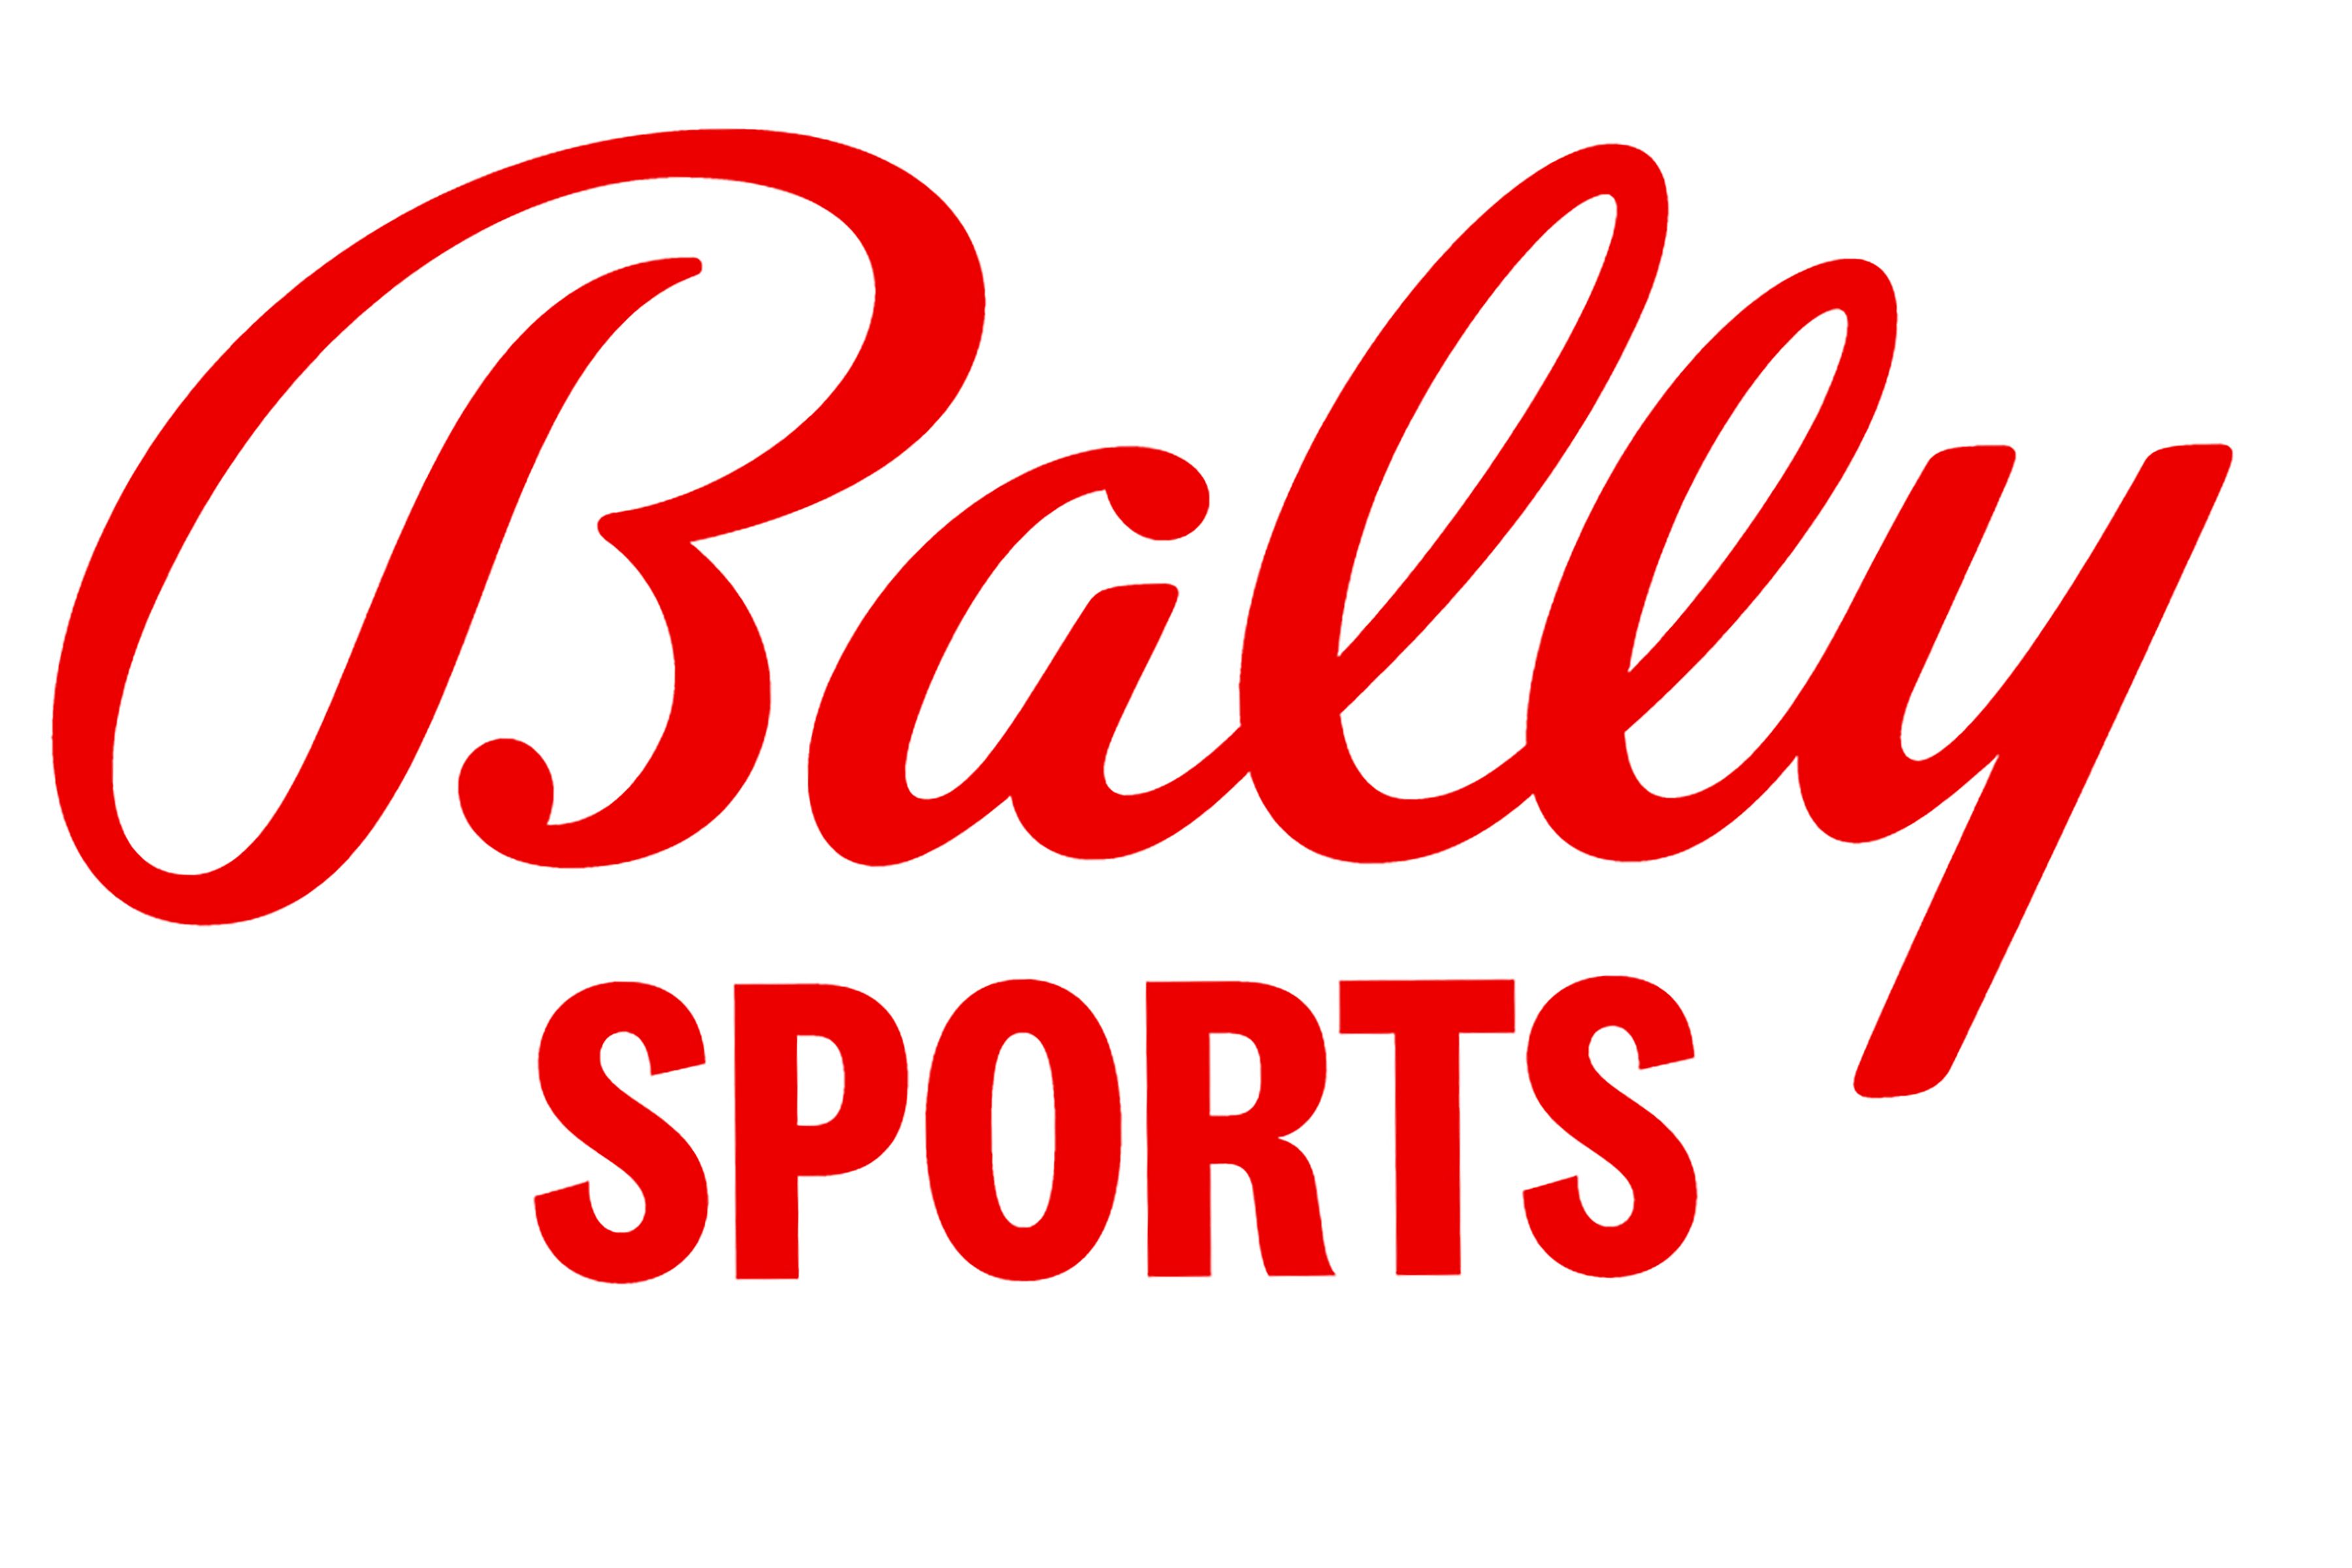 Former Fox regional networks begin new era as Bally Sports The Seattle Times